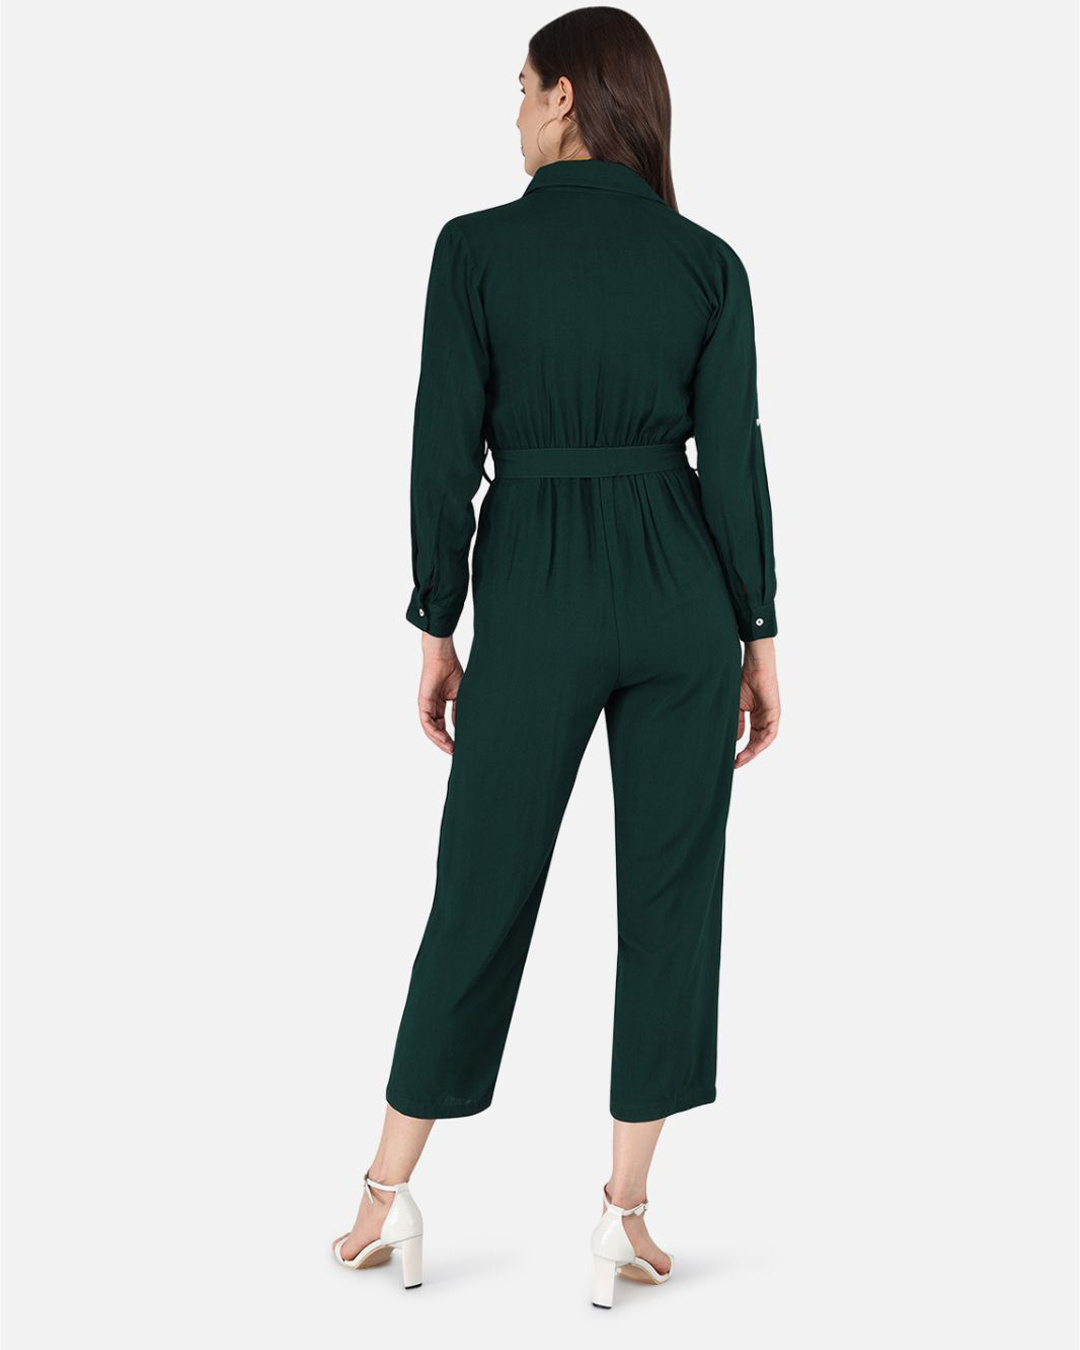 Shop Women's Green Basic jumpsuit-Back